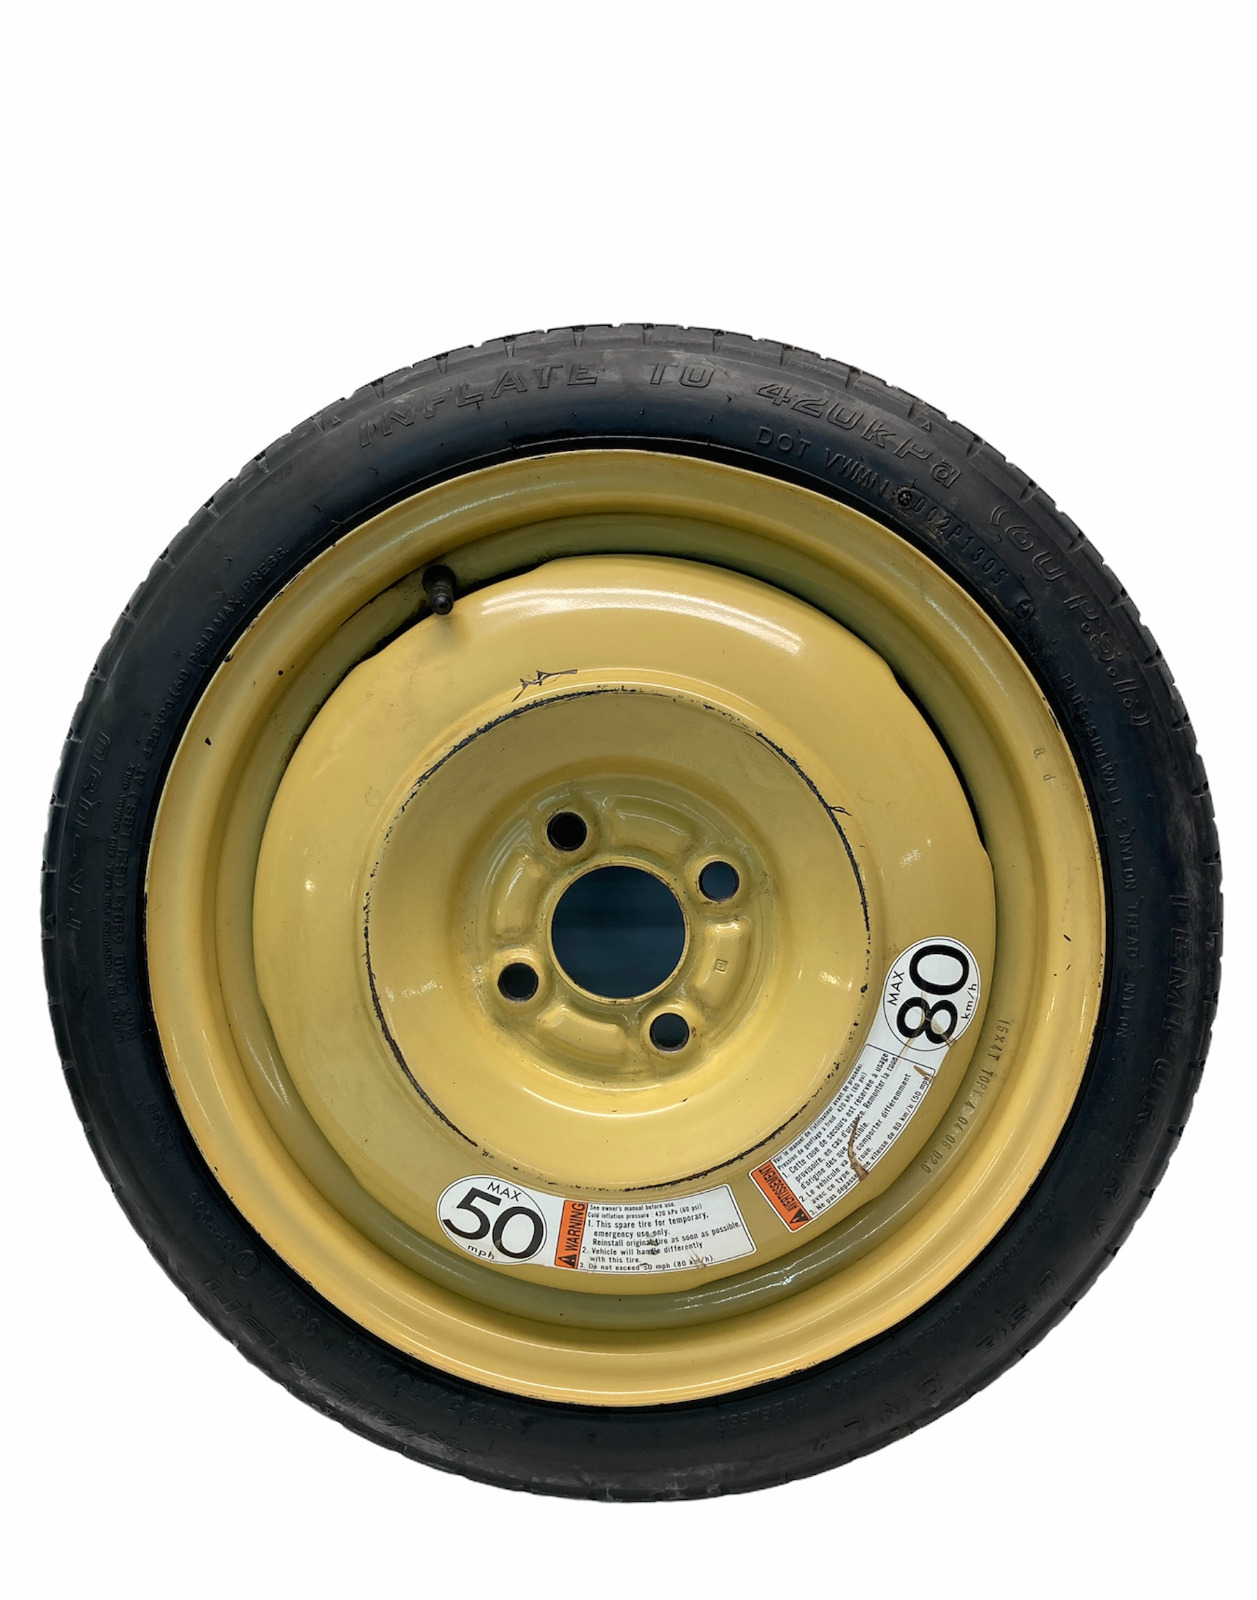 2002-2007 Suzuki Aerio Emergency Spare Tire Wheel Compact Donut T125/70D15 OEM